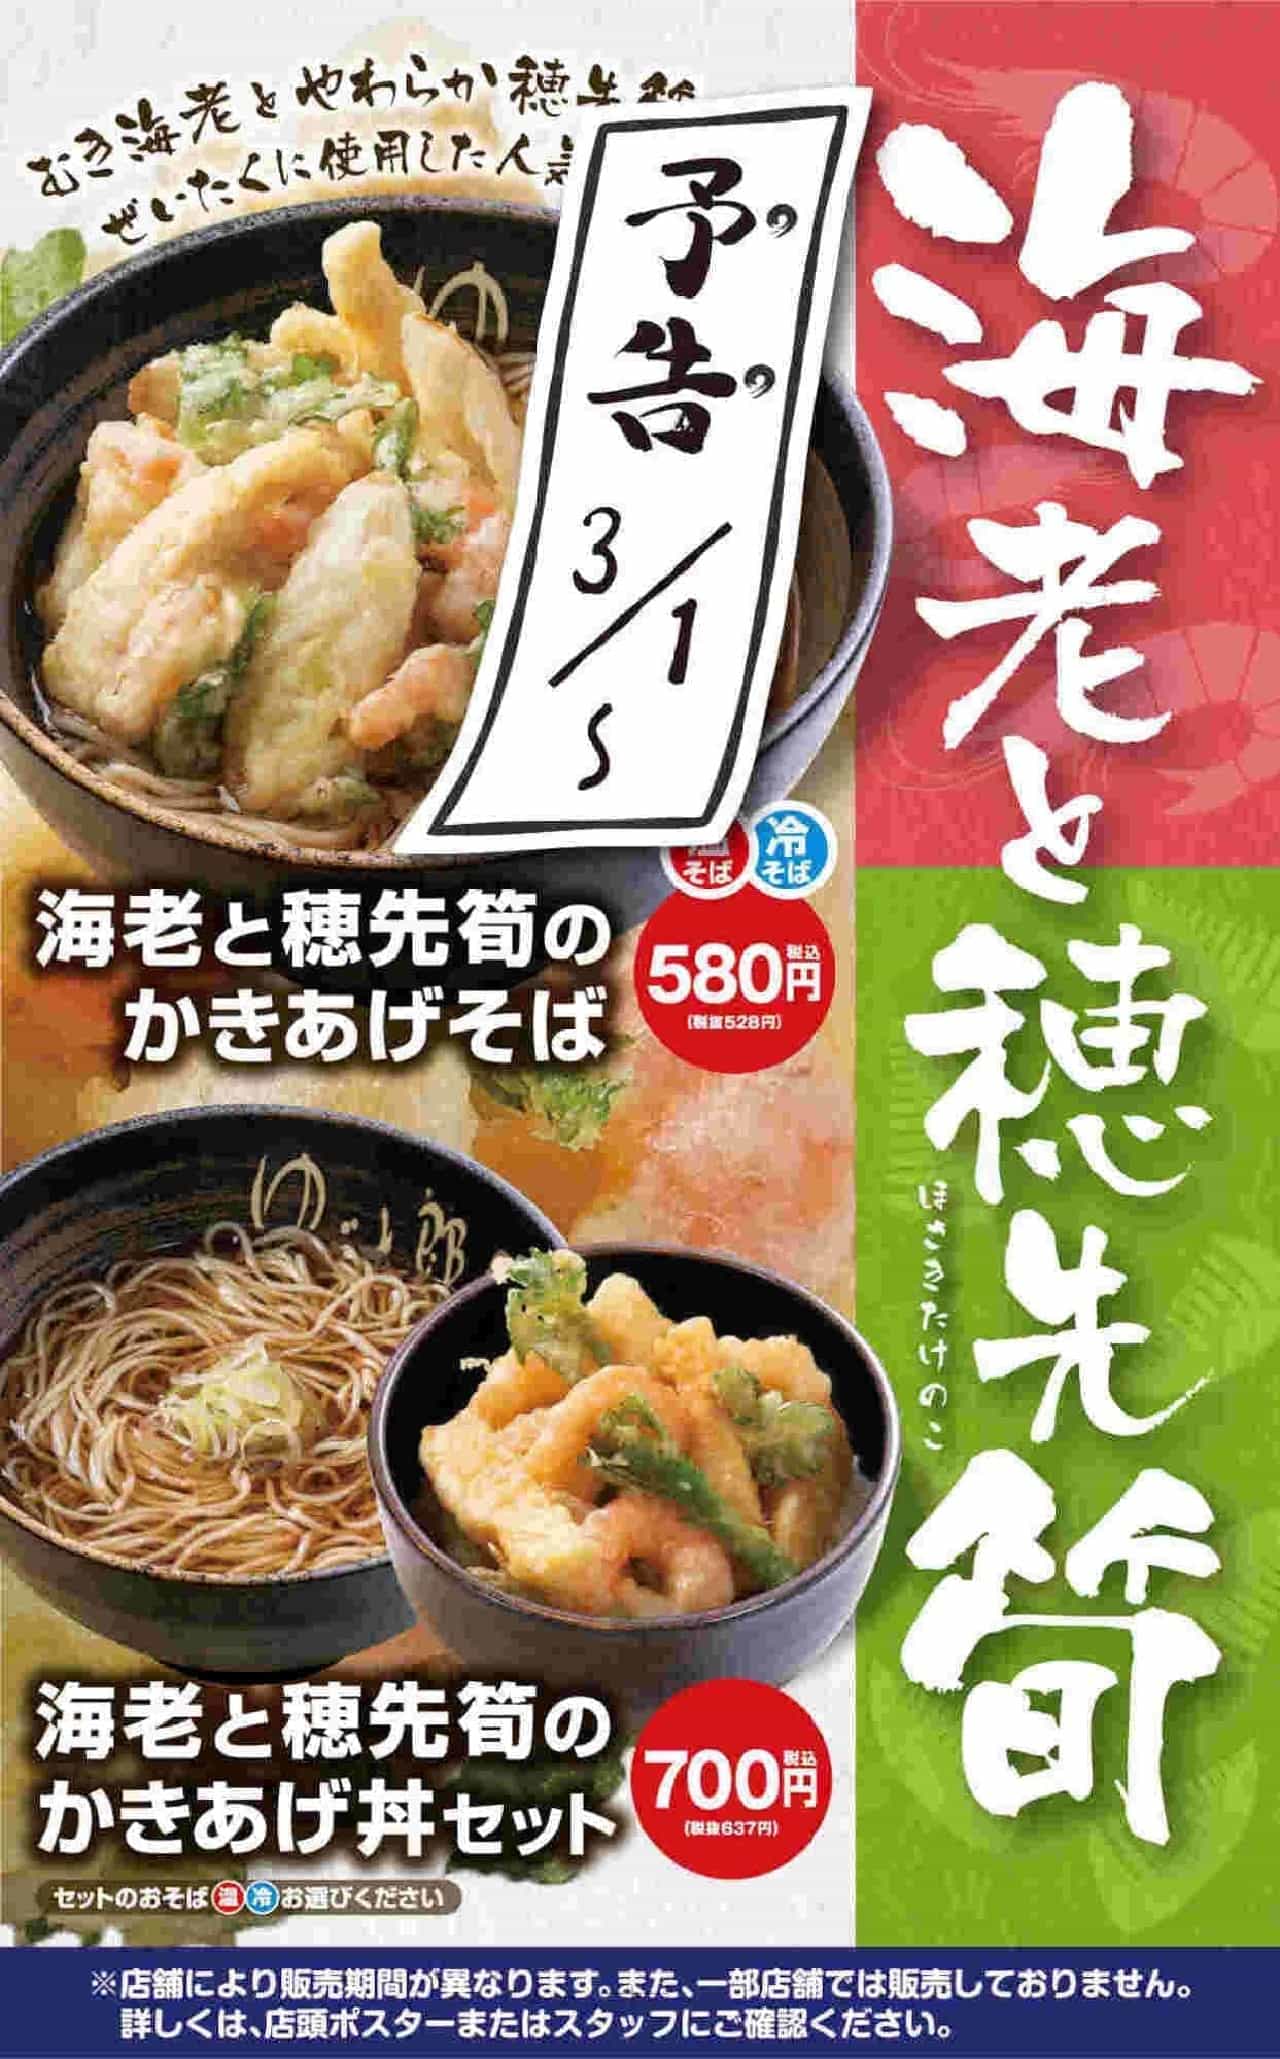 Boiled Taro "Kakiage Soba with Shrimp and Bamboo Shoots" "Ageage Shrimp Ten Chinese"